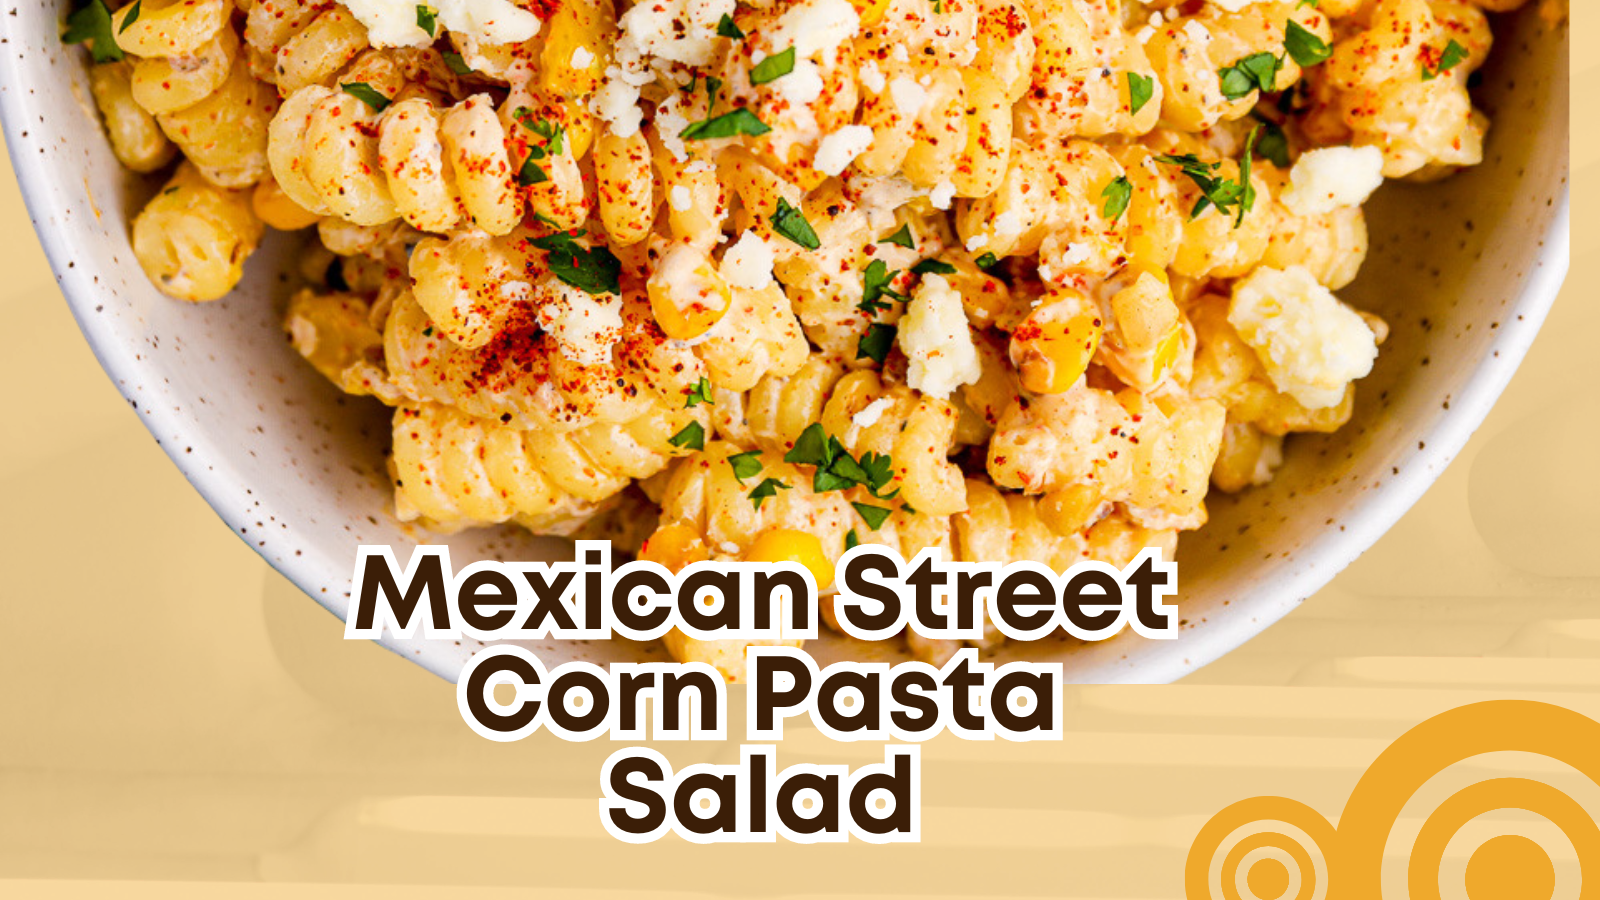 Mexican Street Corn Pasta Salad1